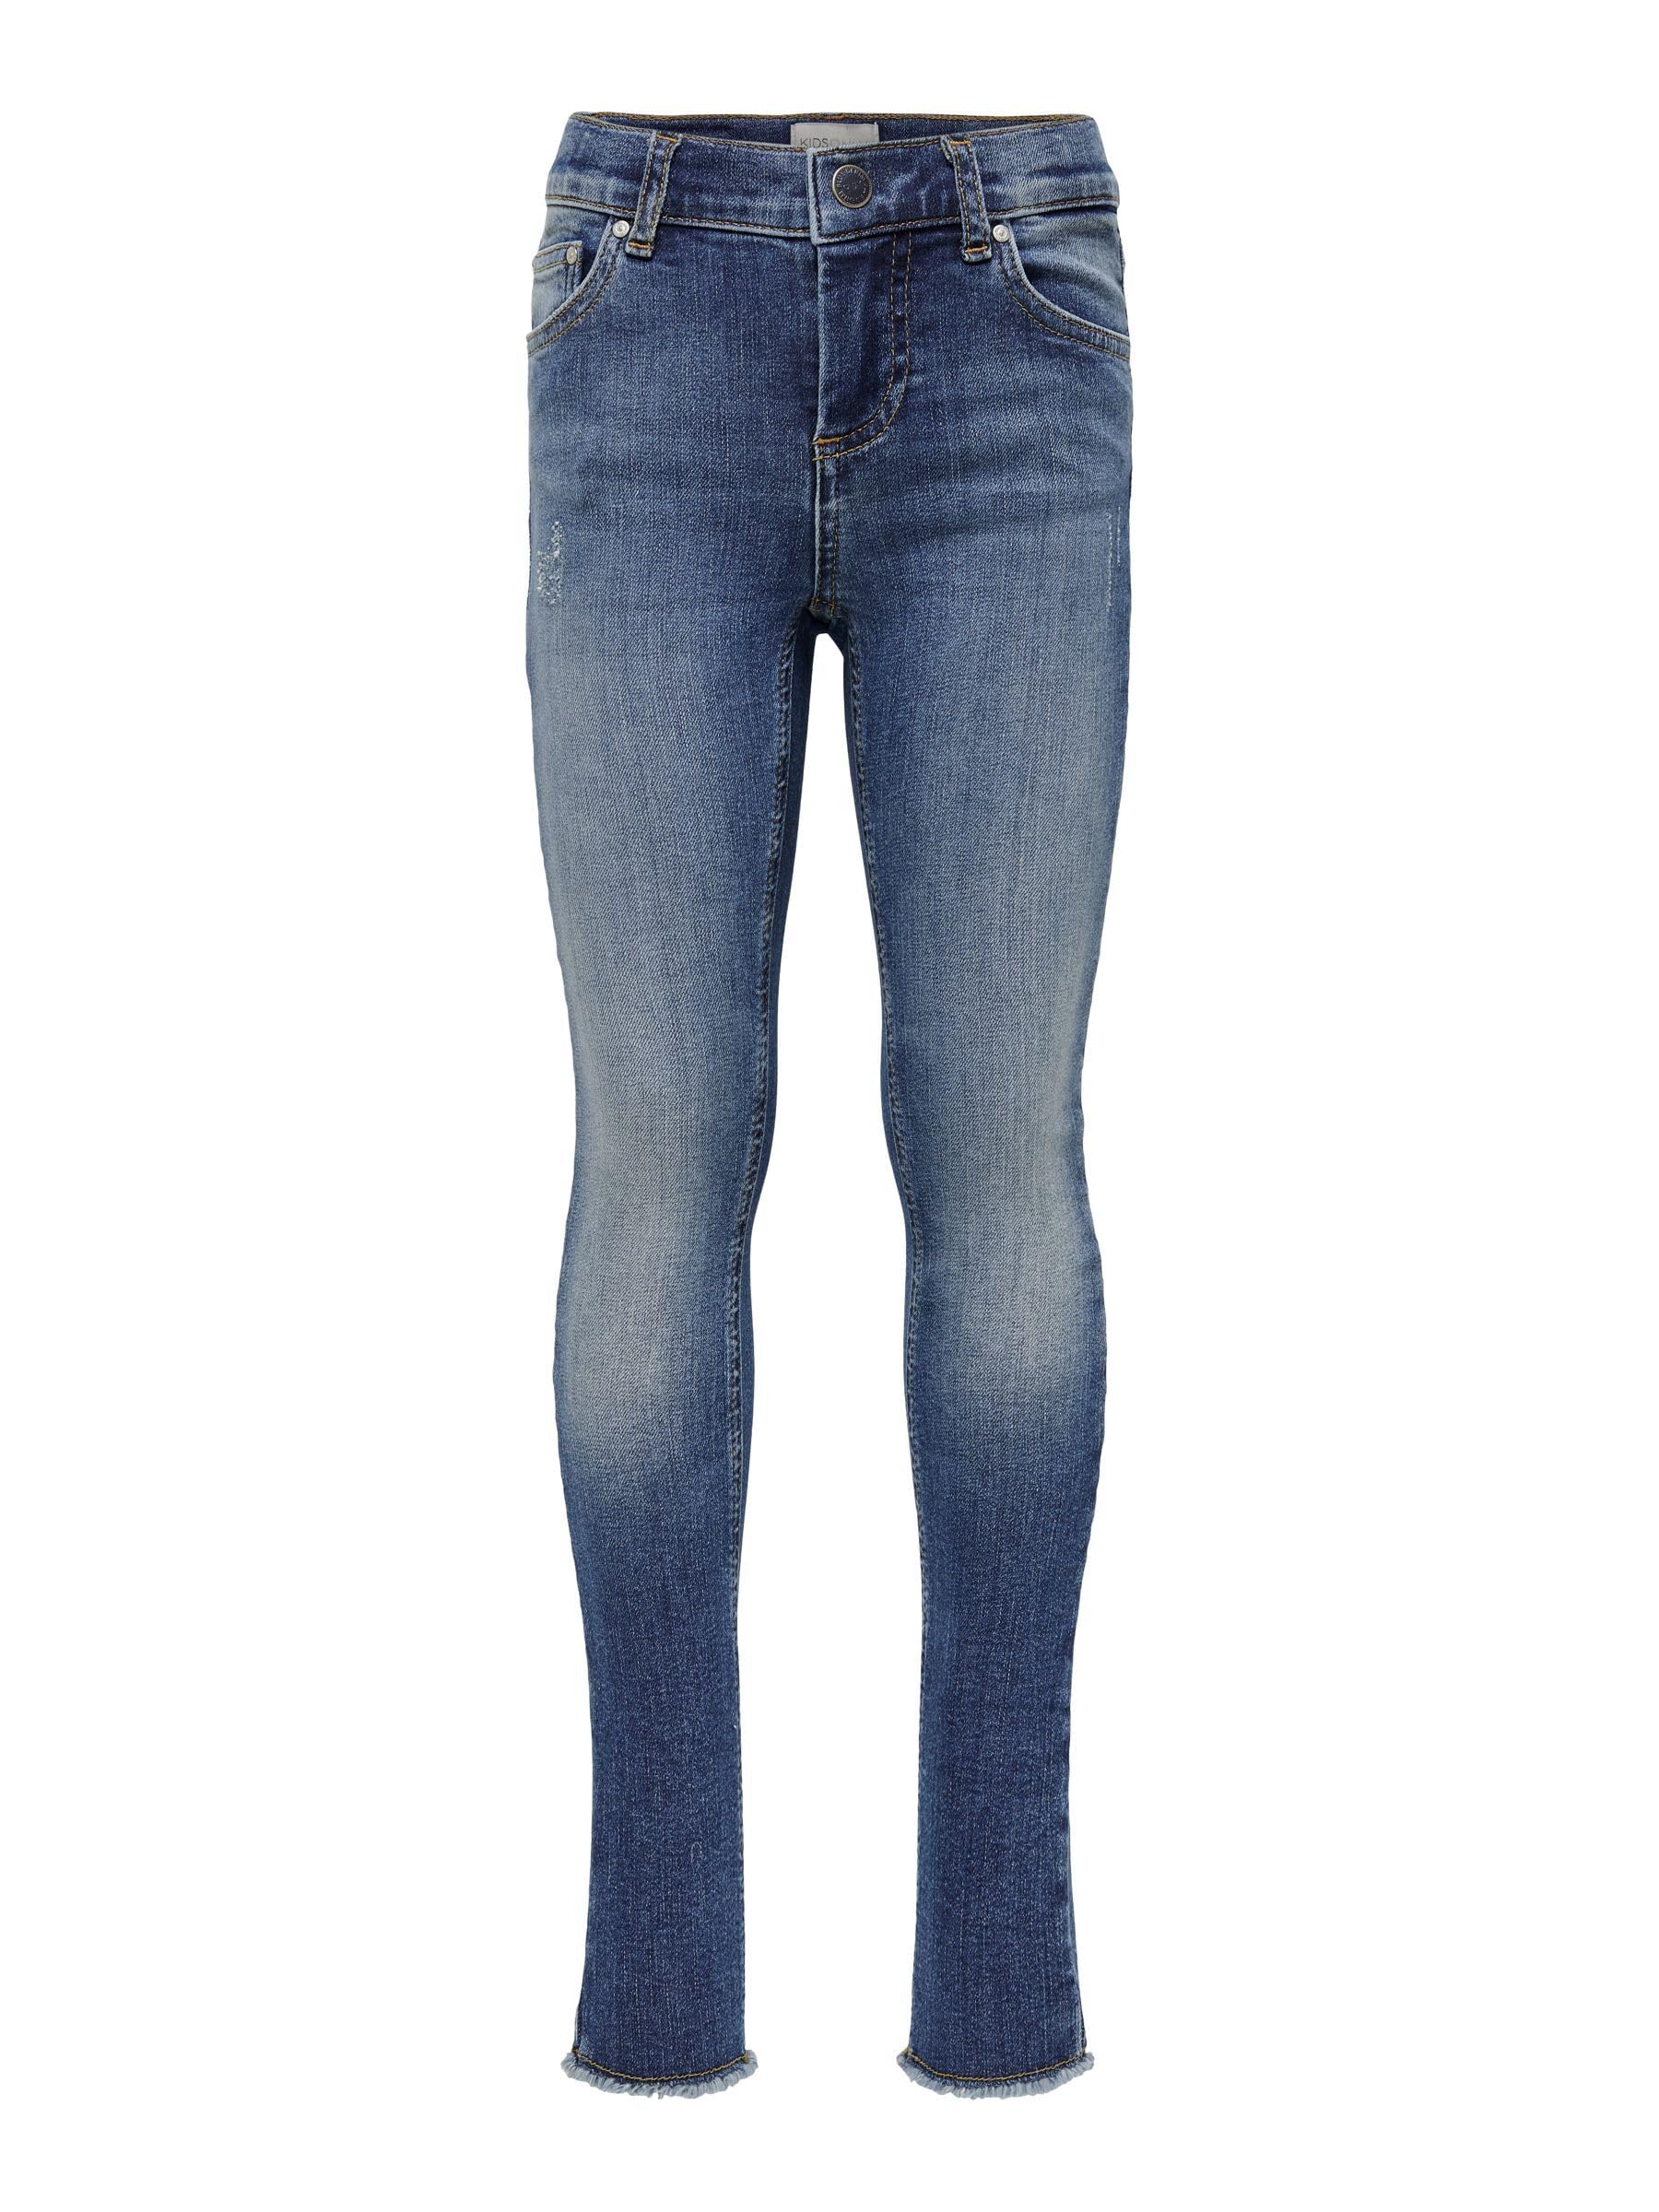 KIDS ONLY Mädchen Konblush Skinny Raw 1303 Jeans, Blue Denim, 152 EU